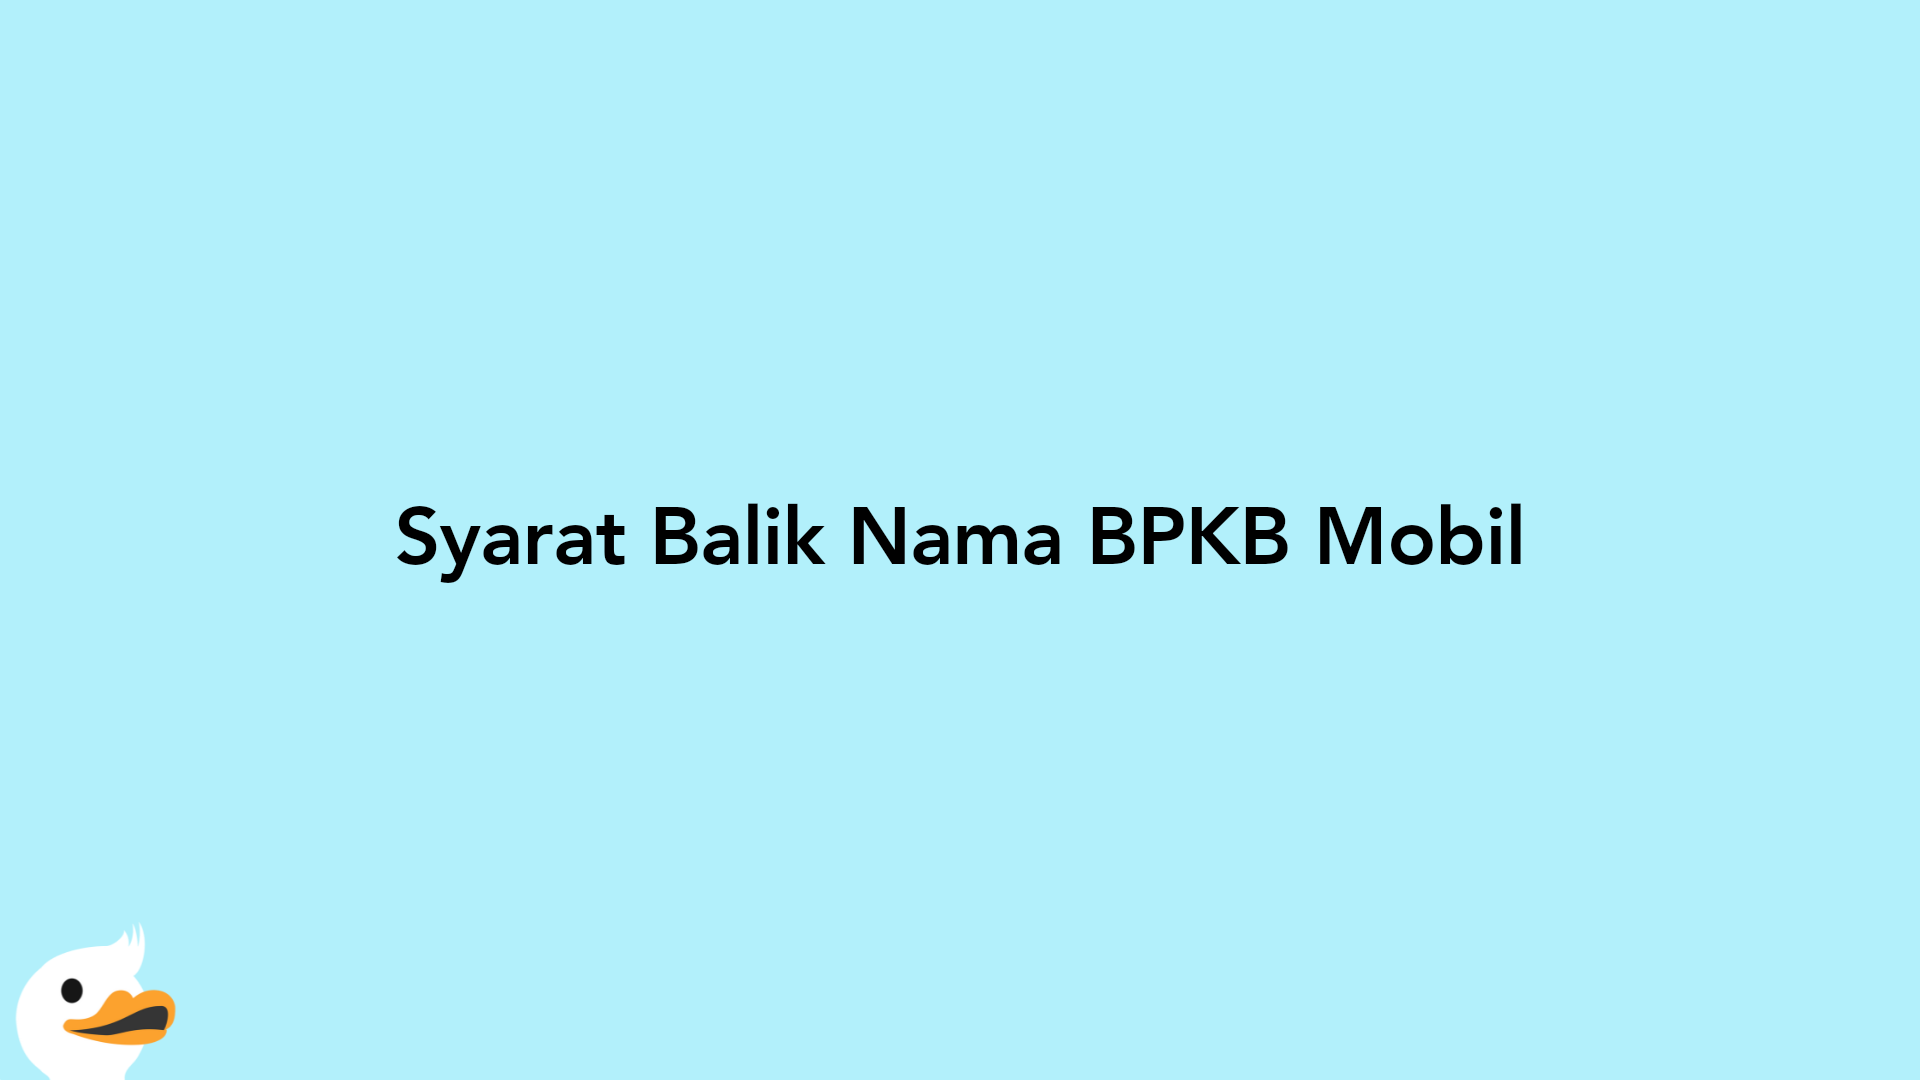 Syarat Balik Nama BPKB Mobil